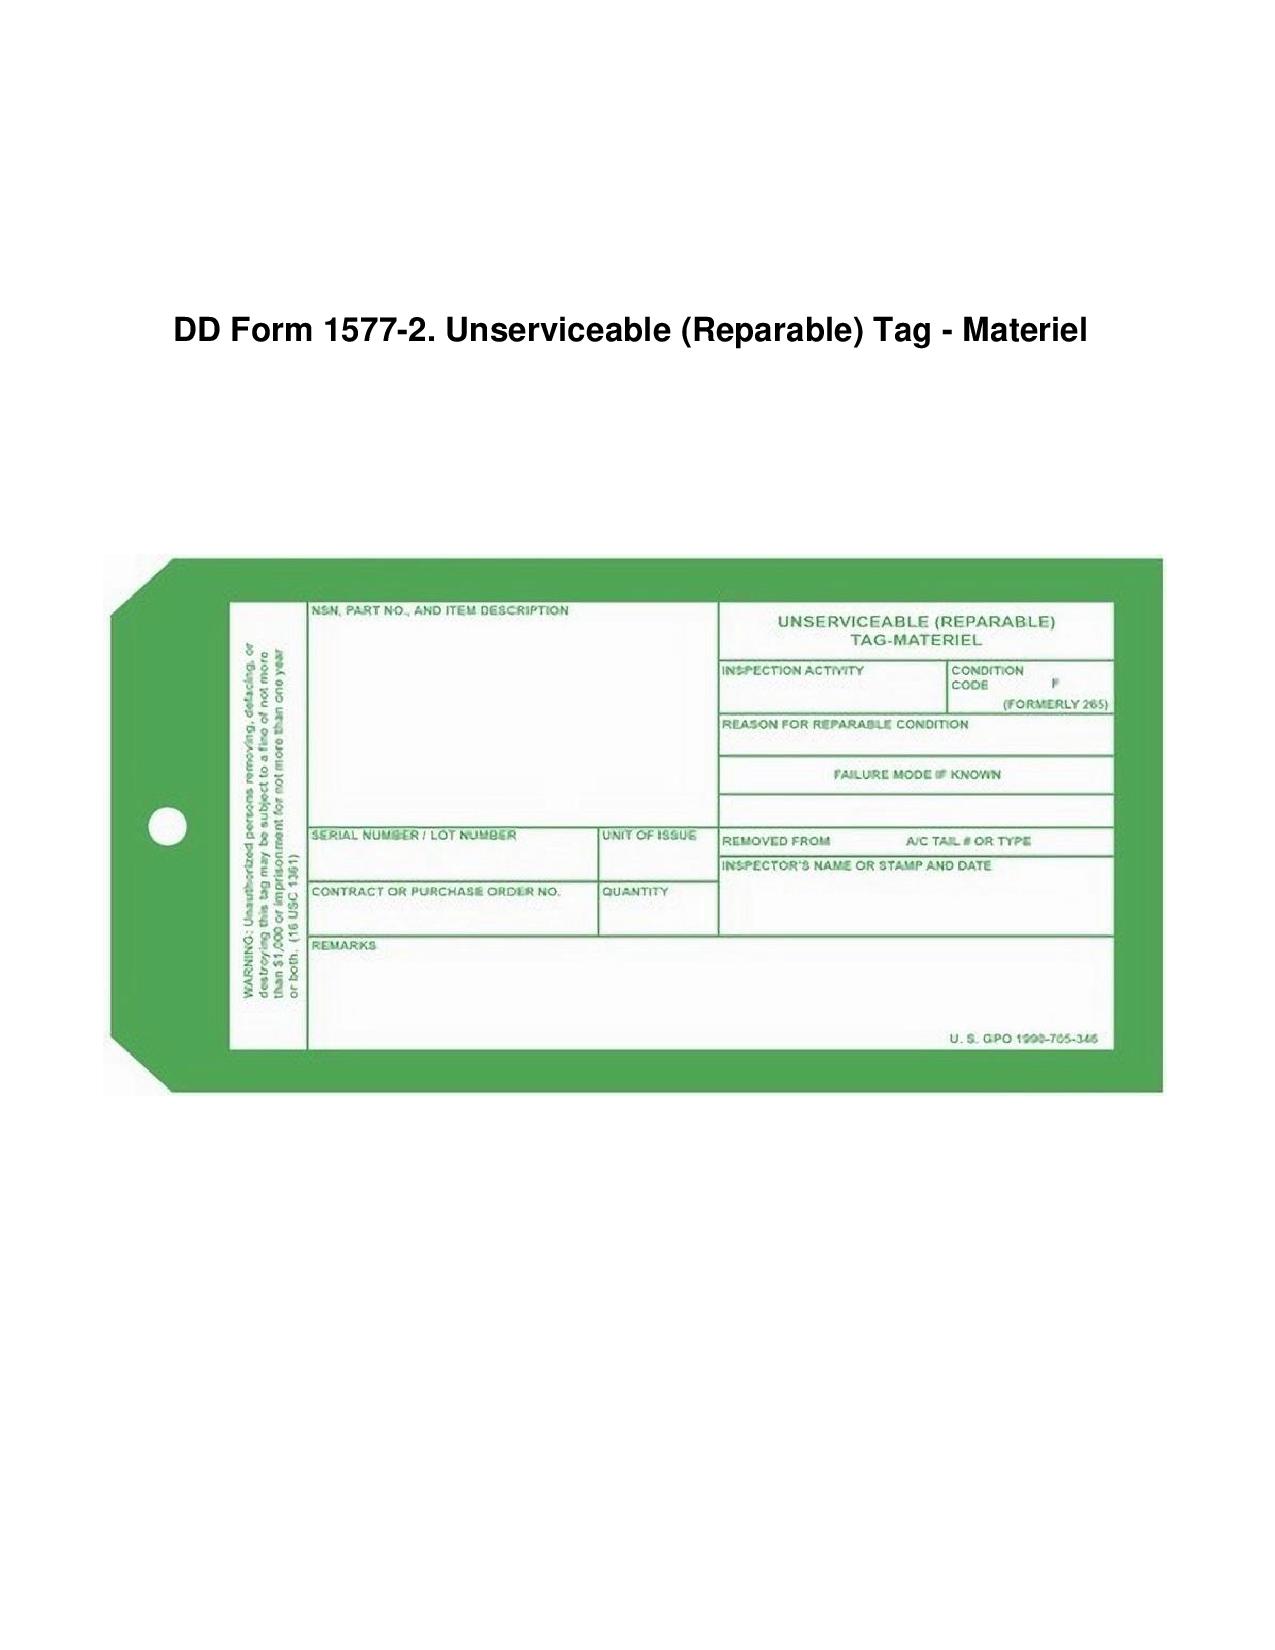 DD Form 1577-2. Unserviceable (Reparable) Tag - Materiel | Forms - Docs ...